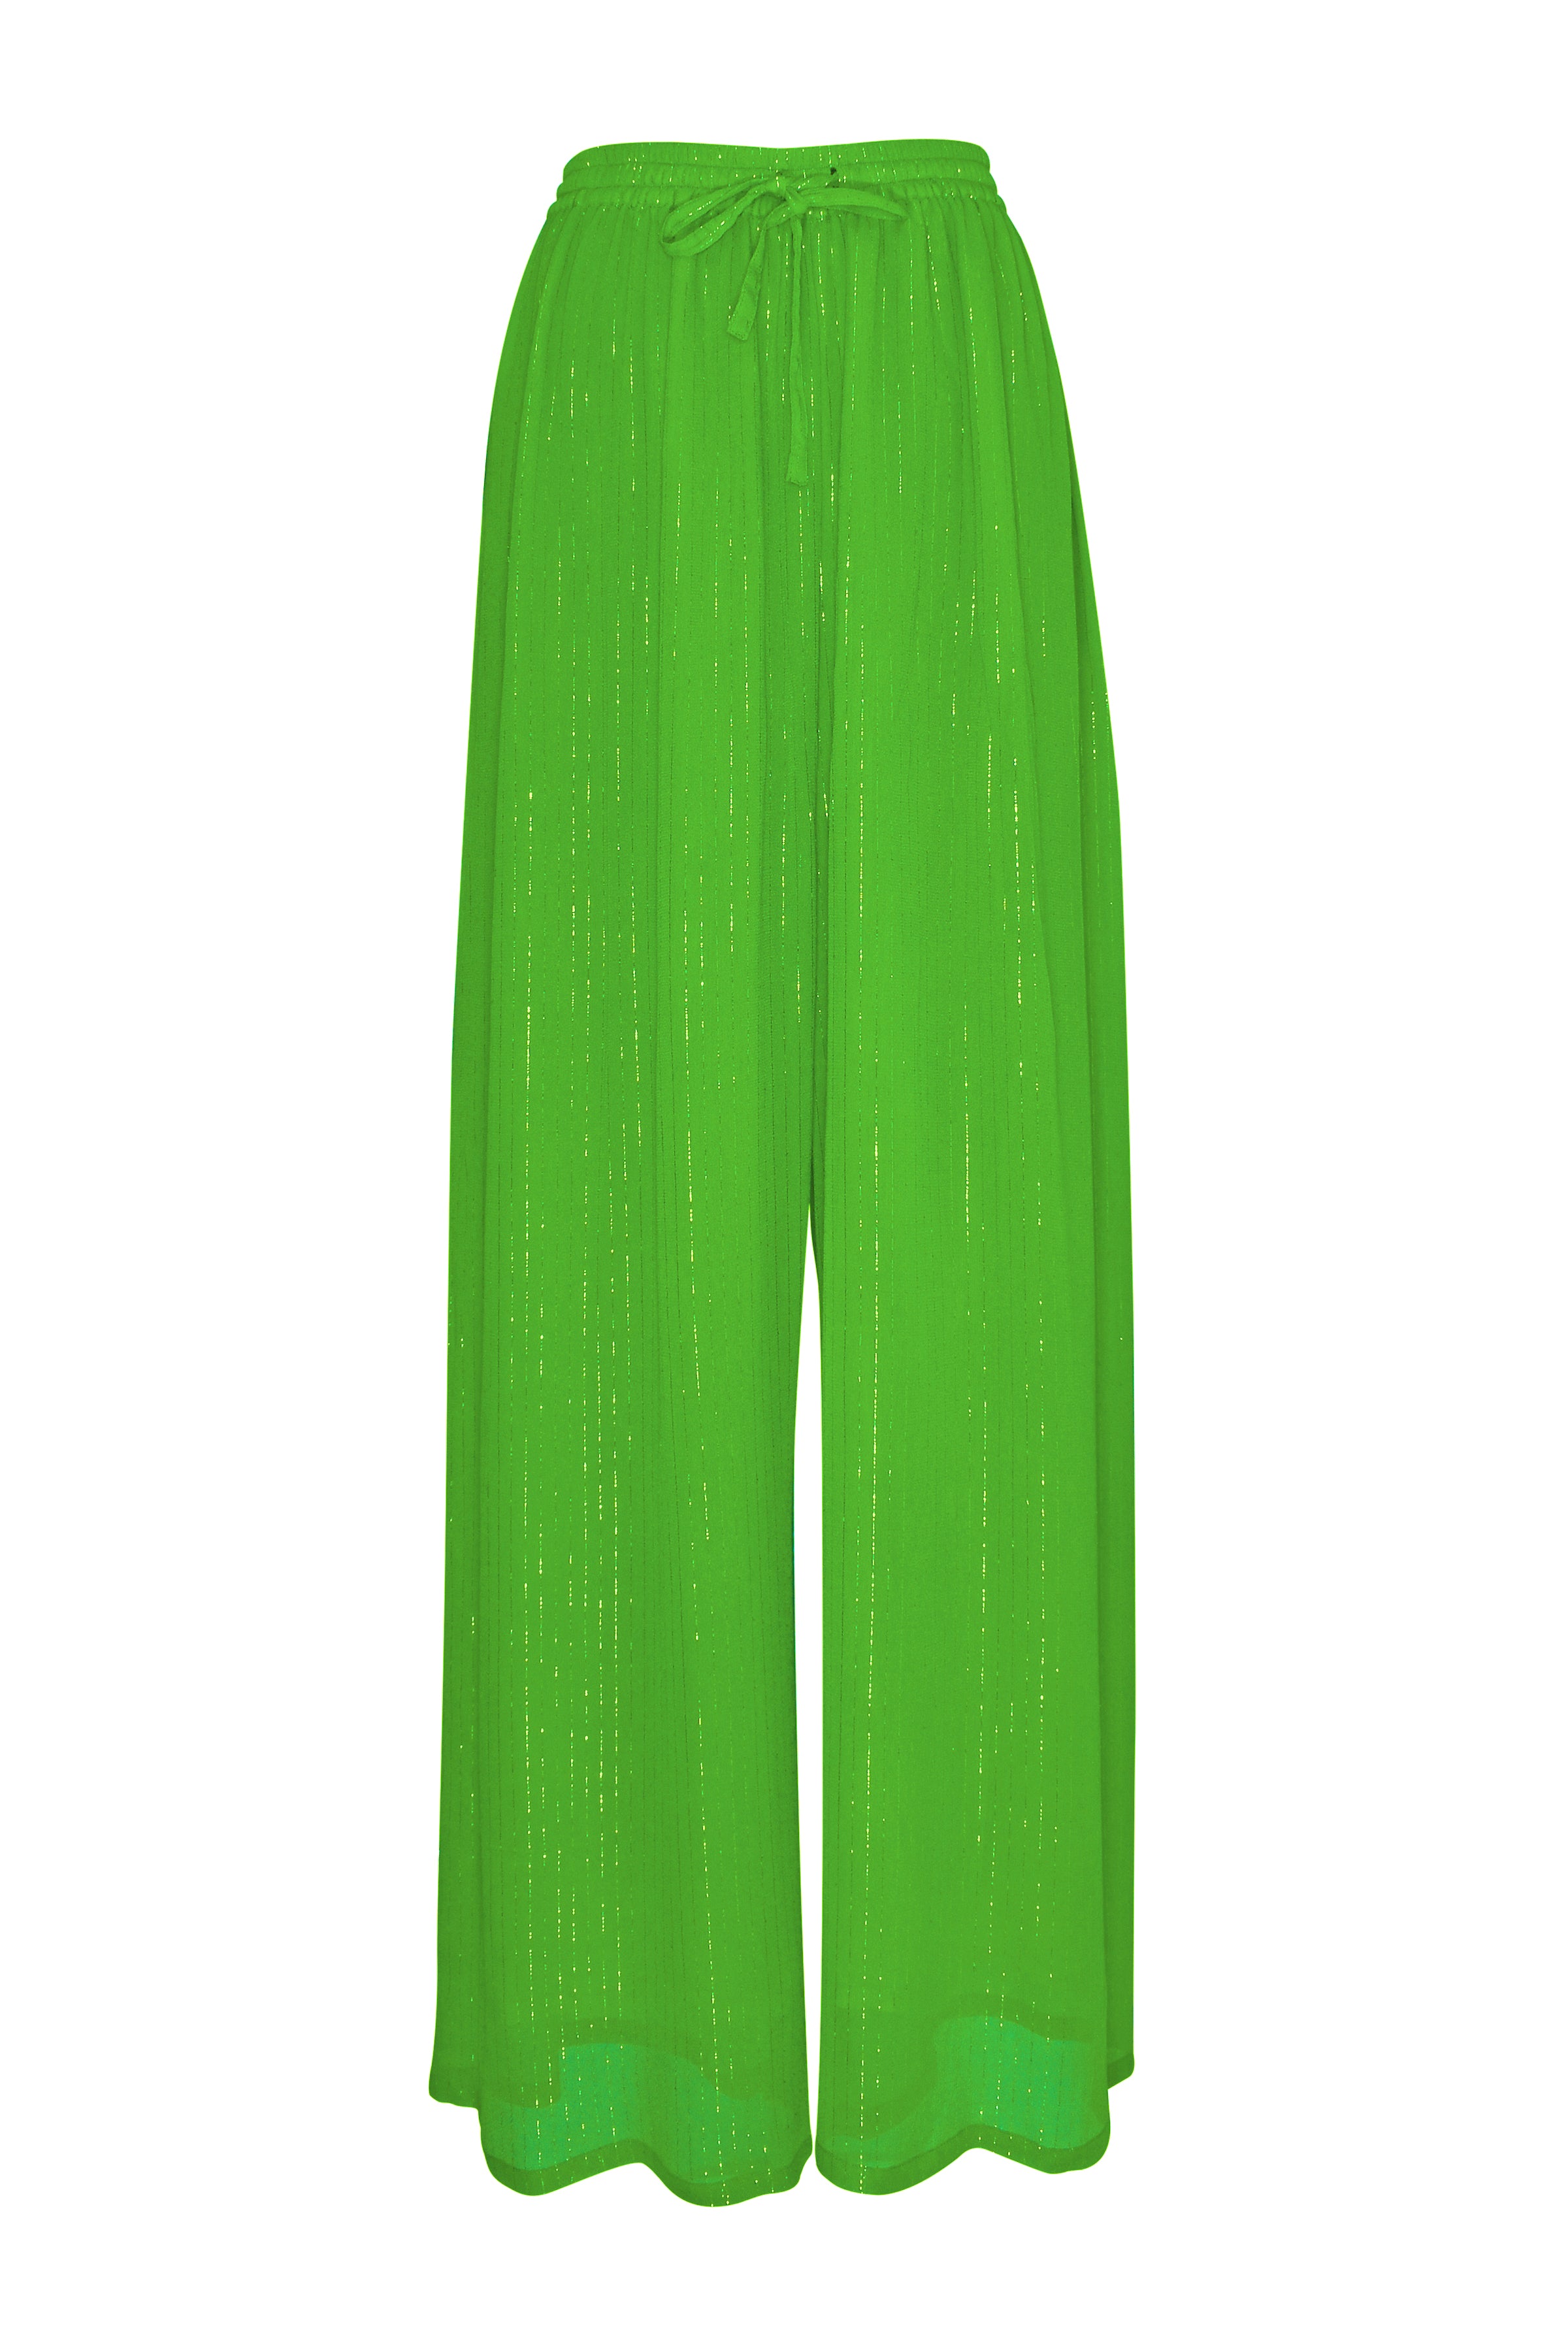 Neon Green Lurex Pants - saisankoh